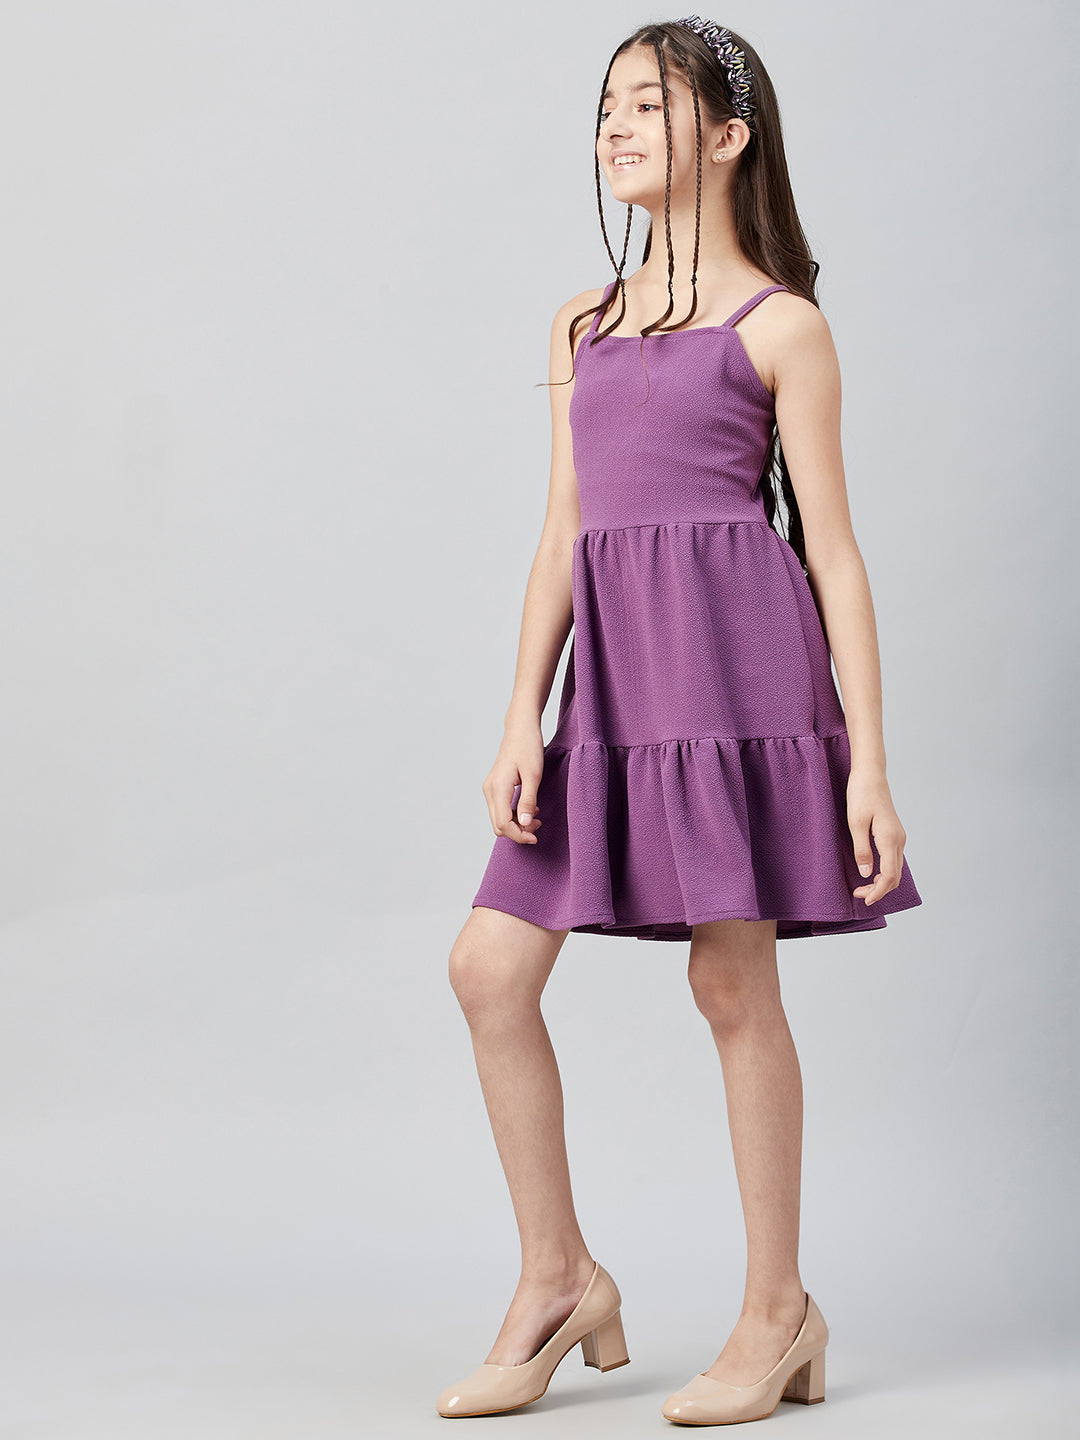 Athena Girl Purple Layered Dress - Athena Lifestyle